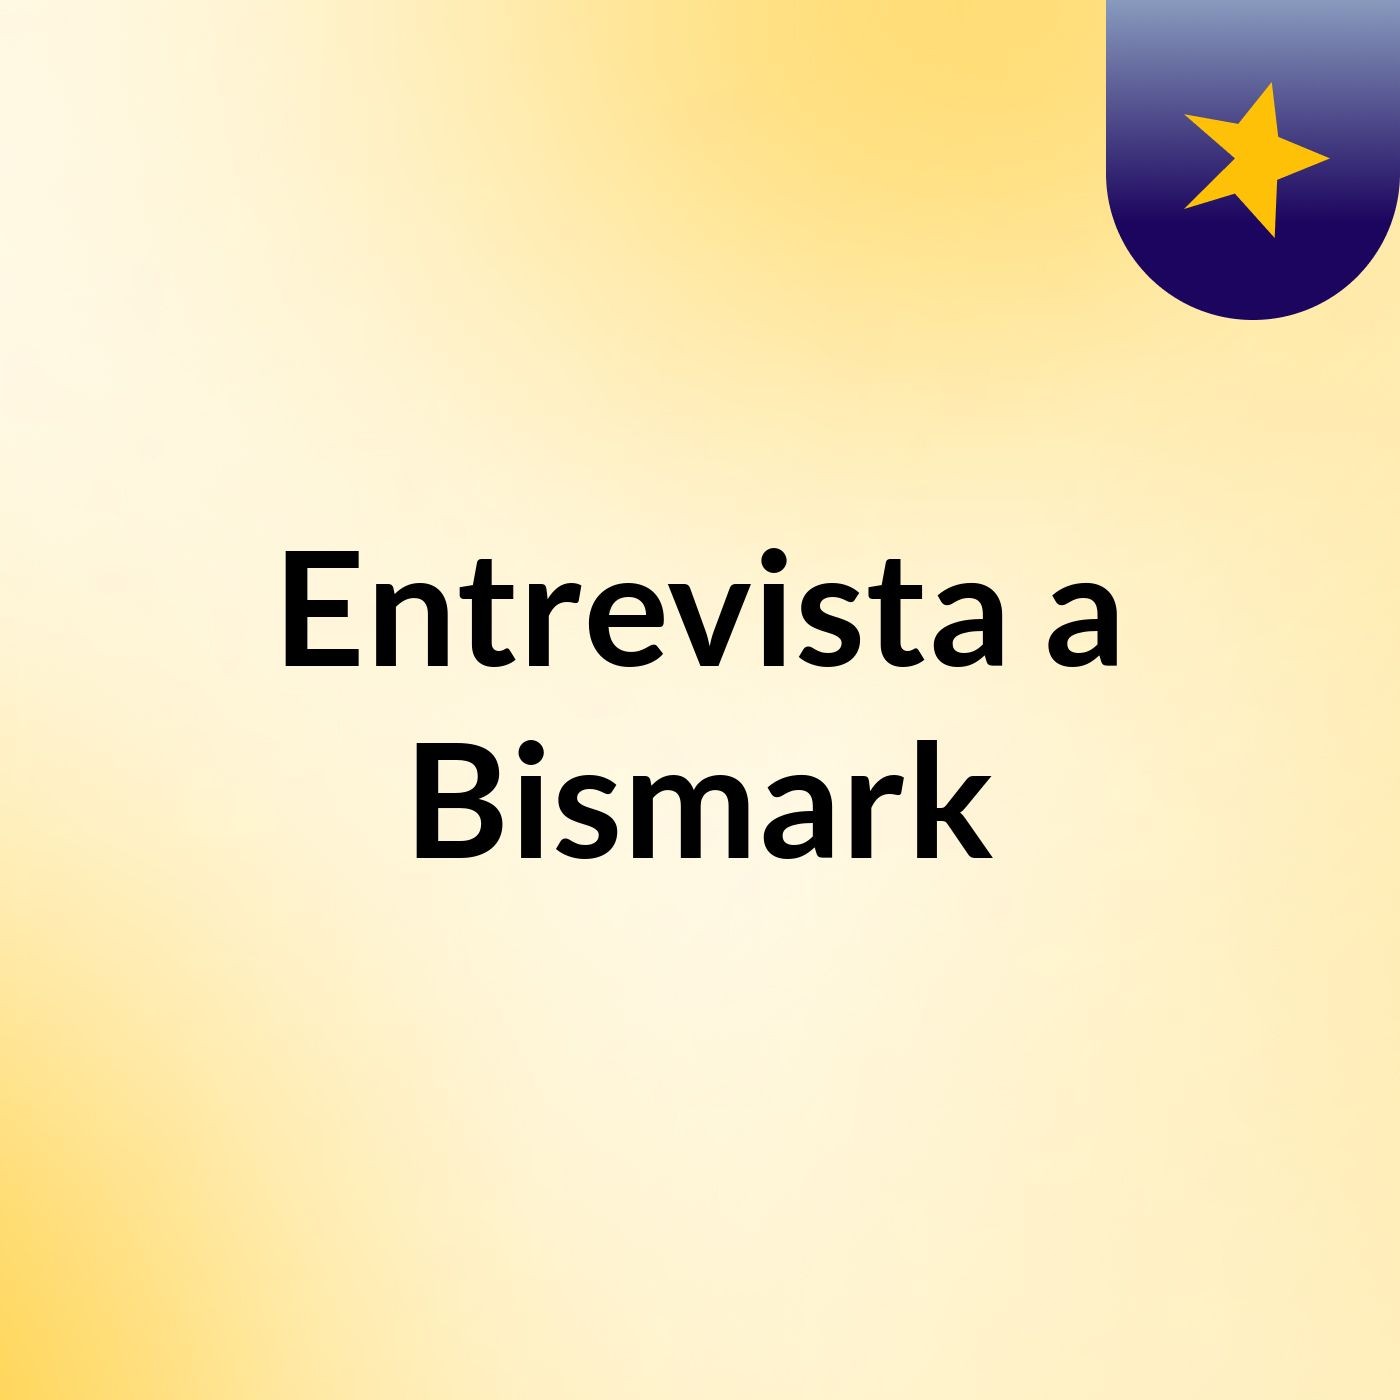 Entrevista a Bismark